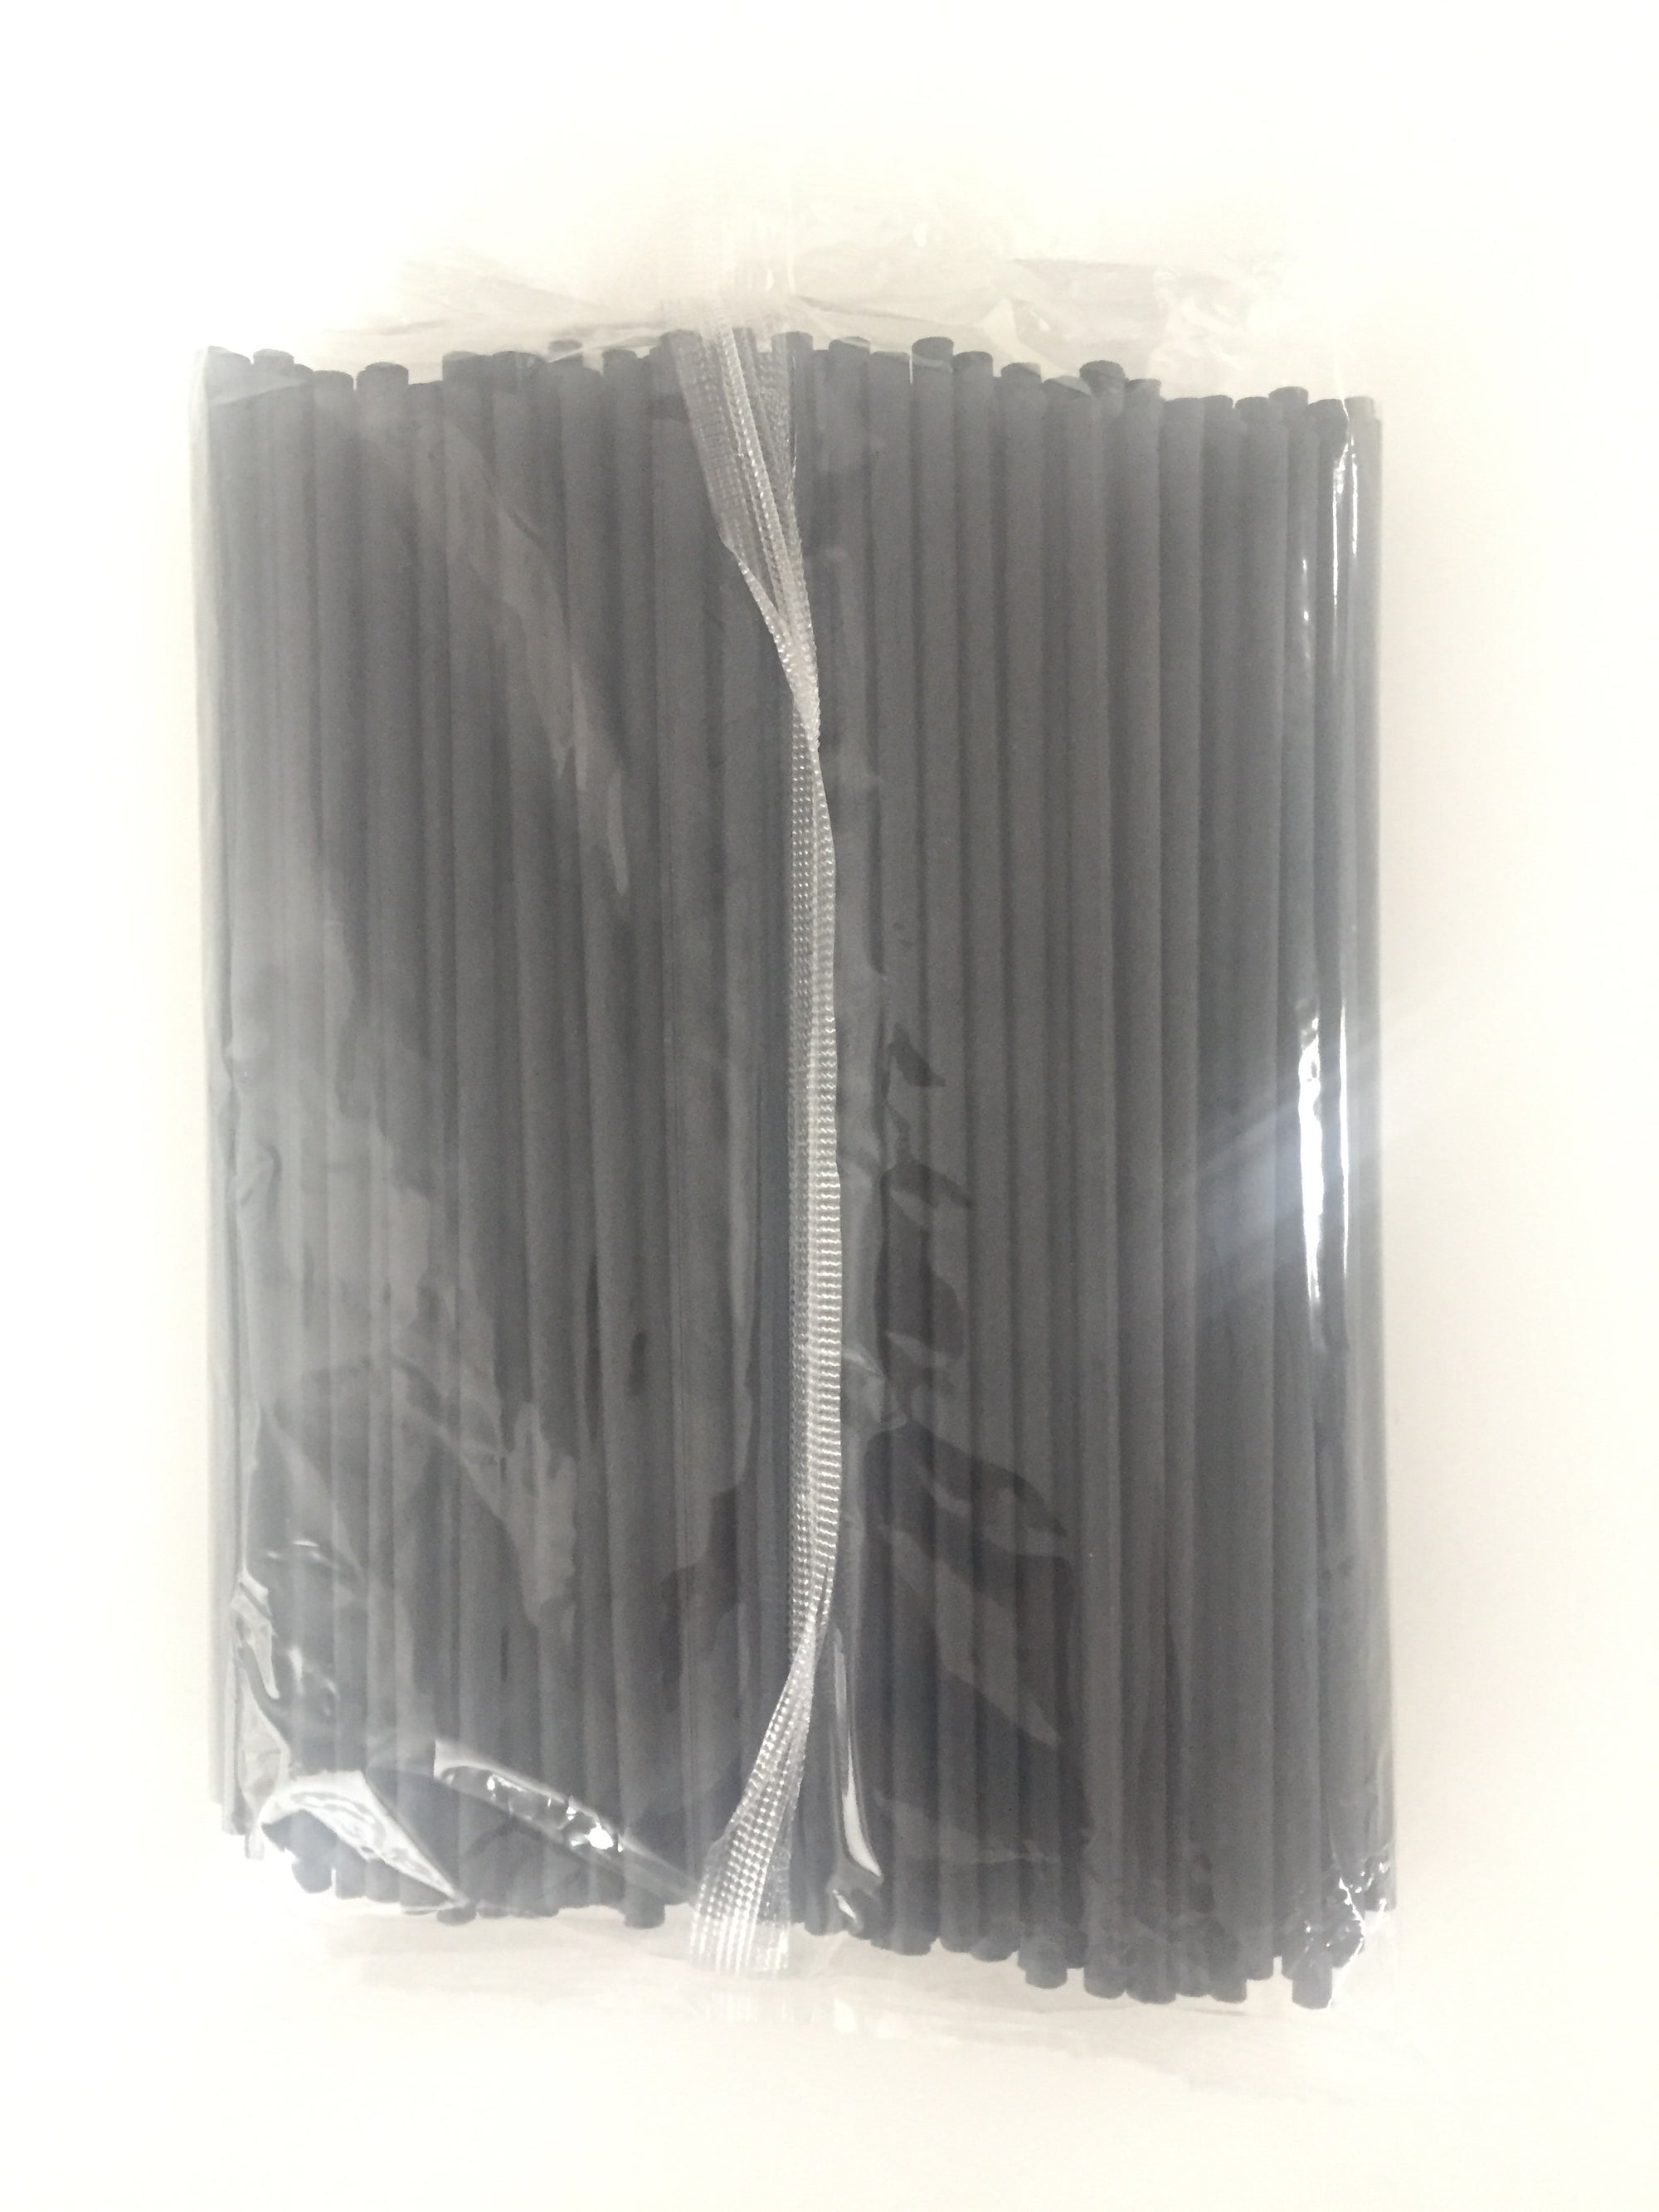 Straight Paper Straws (Black) 250 units